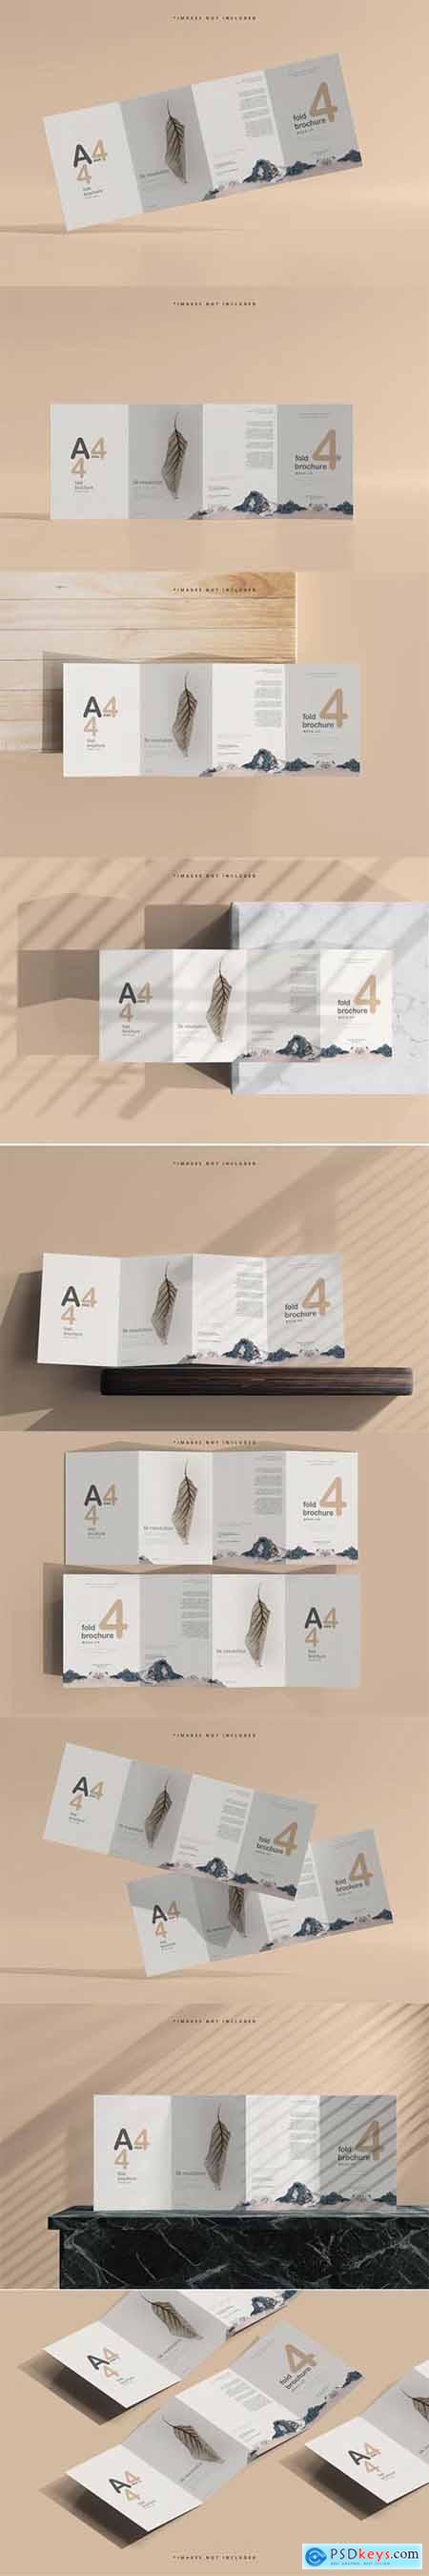 A4 size four fold brochure mockup